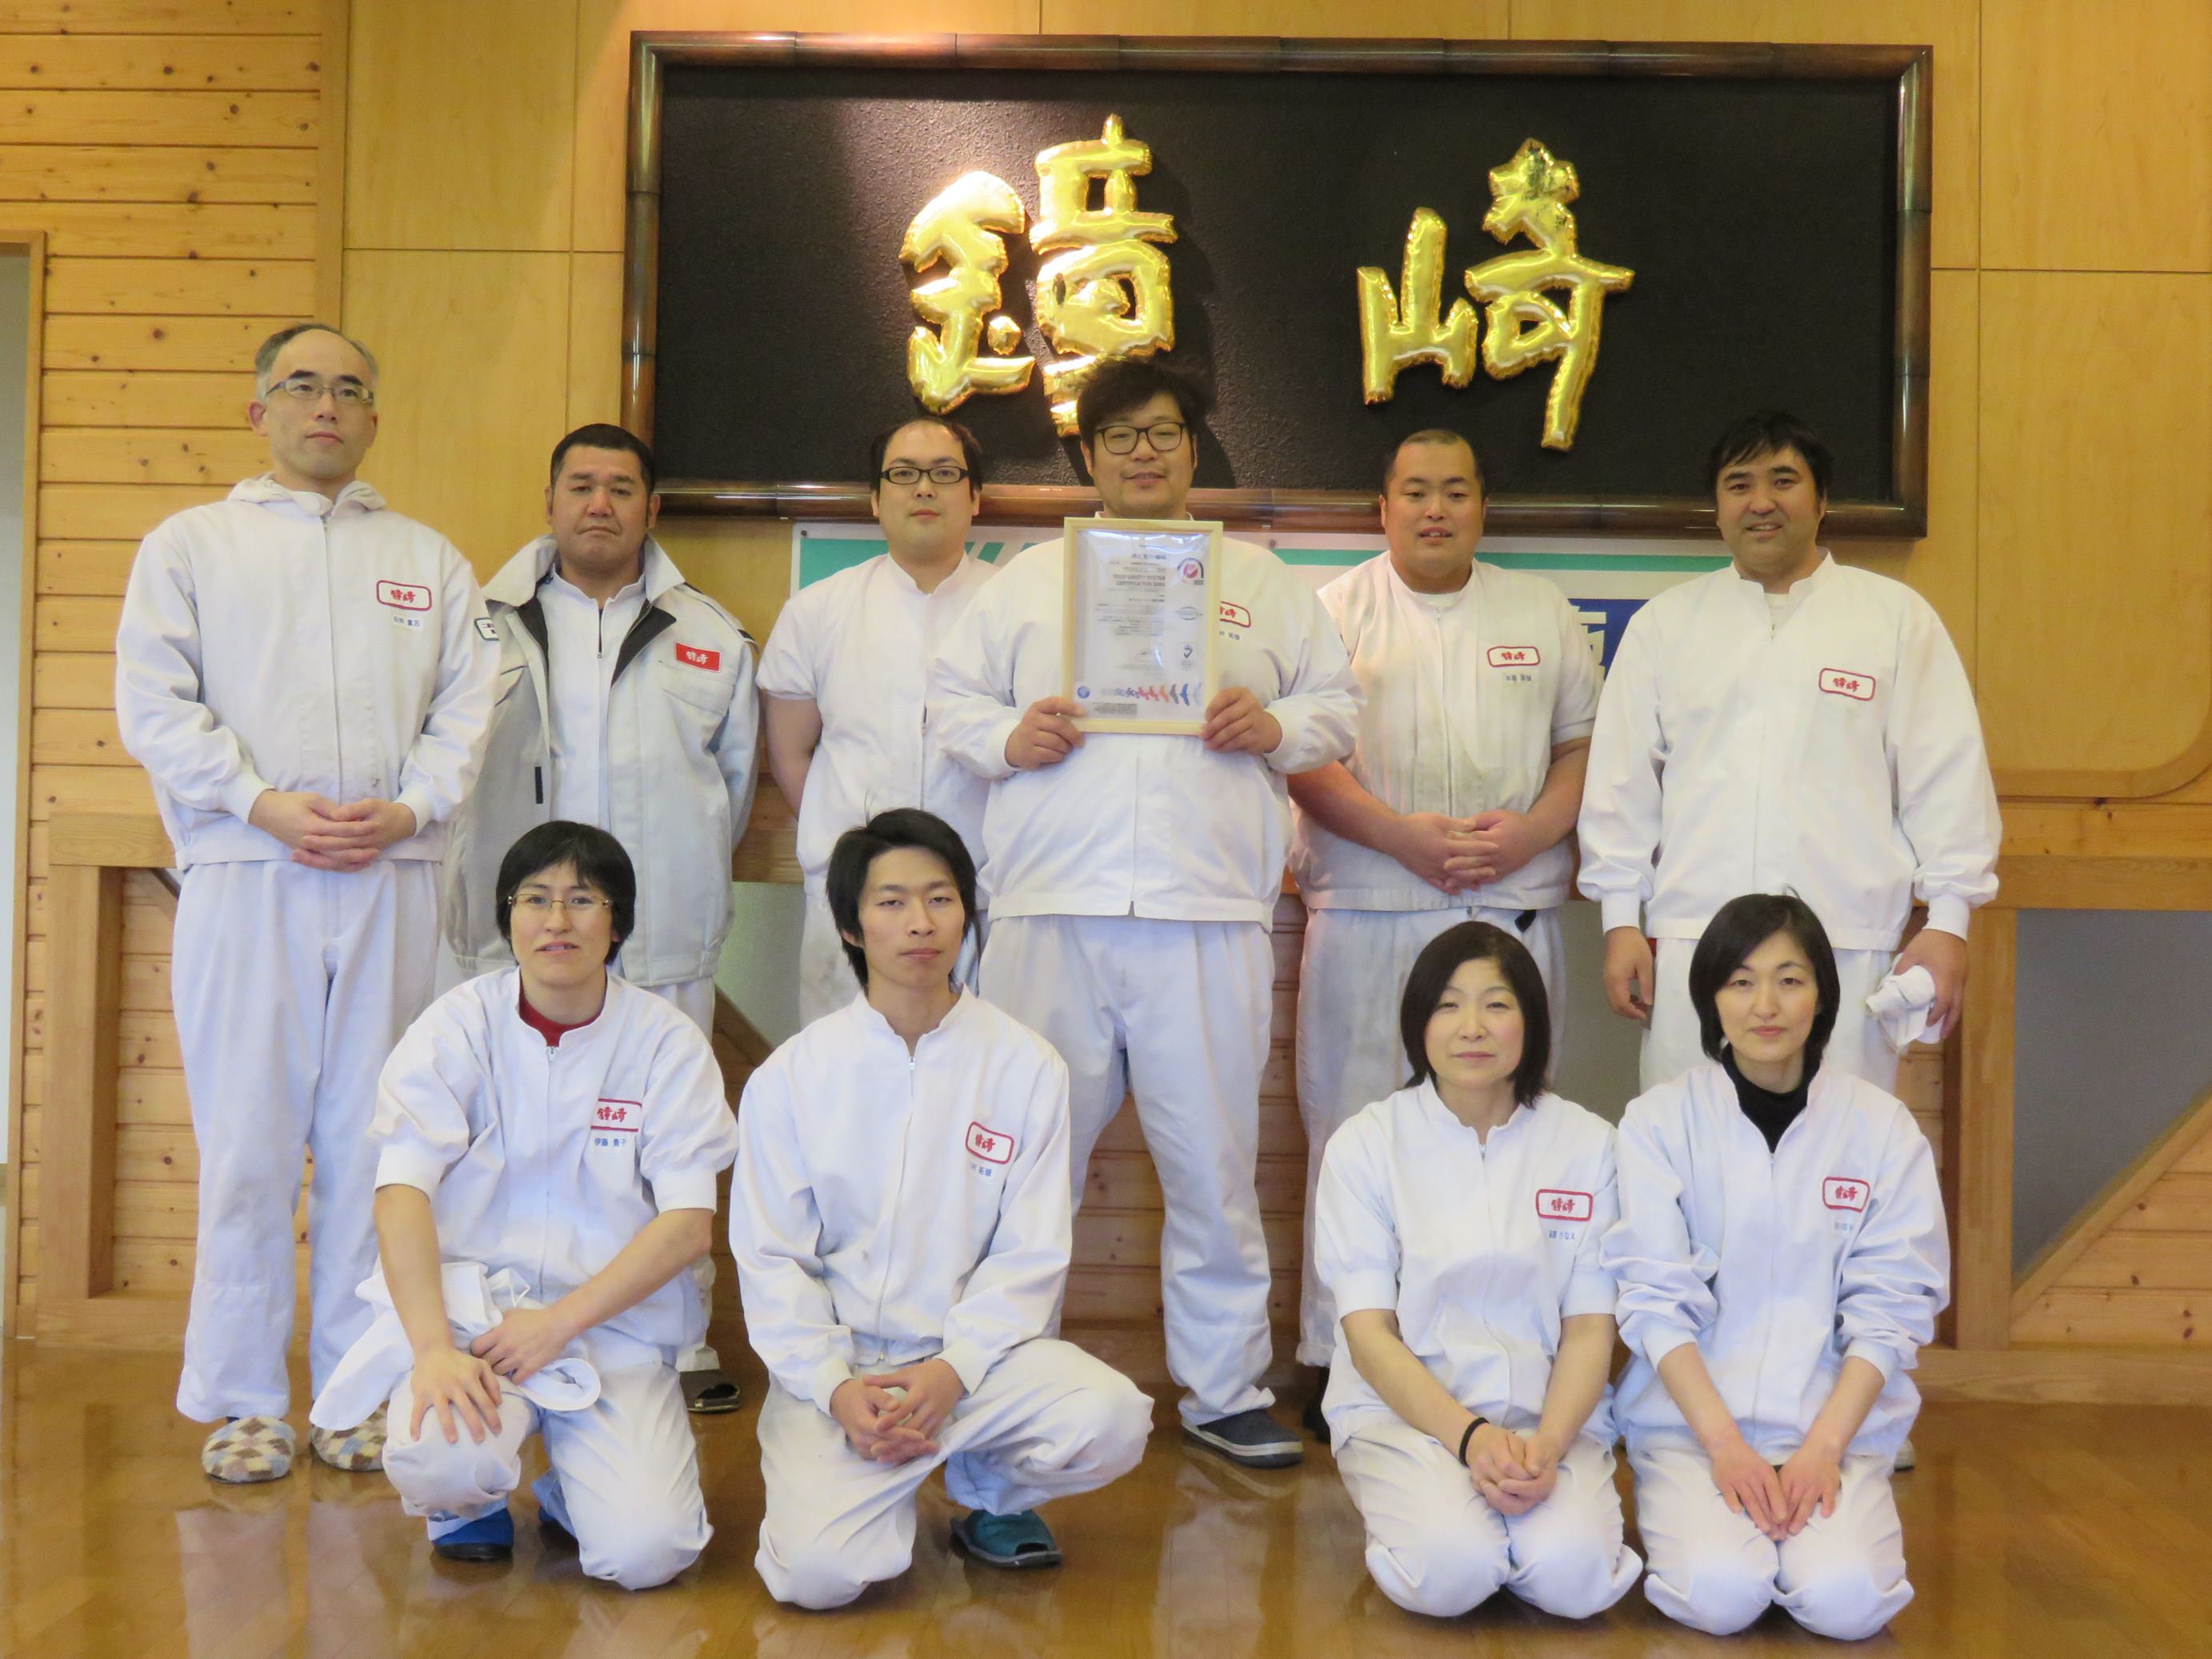 kanezaki Taiwa plant fssc22000 certificated